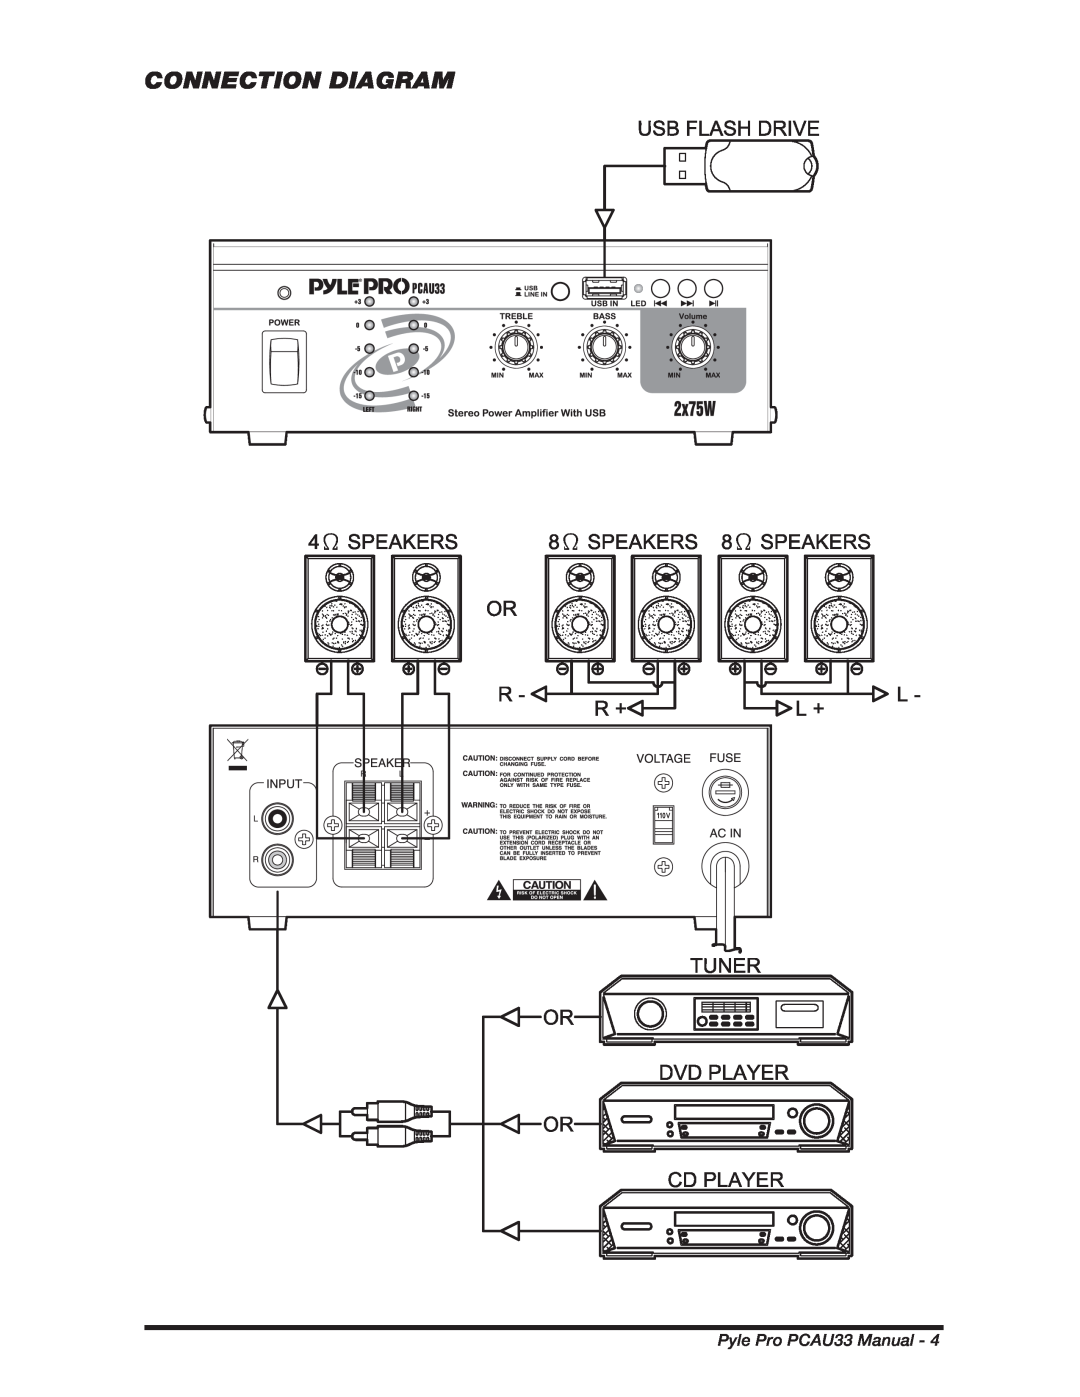 PYLE Audio manual Connection Diagram, Pyle Pro PCAU33 Manual 